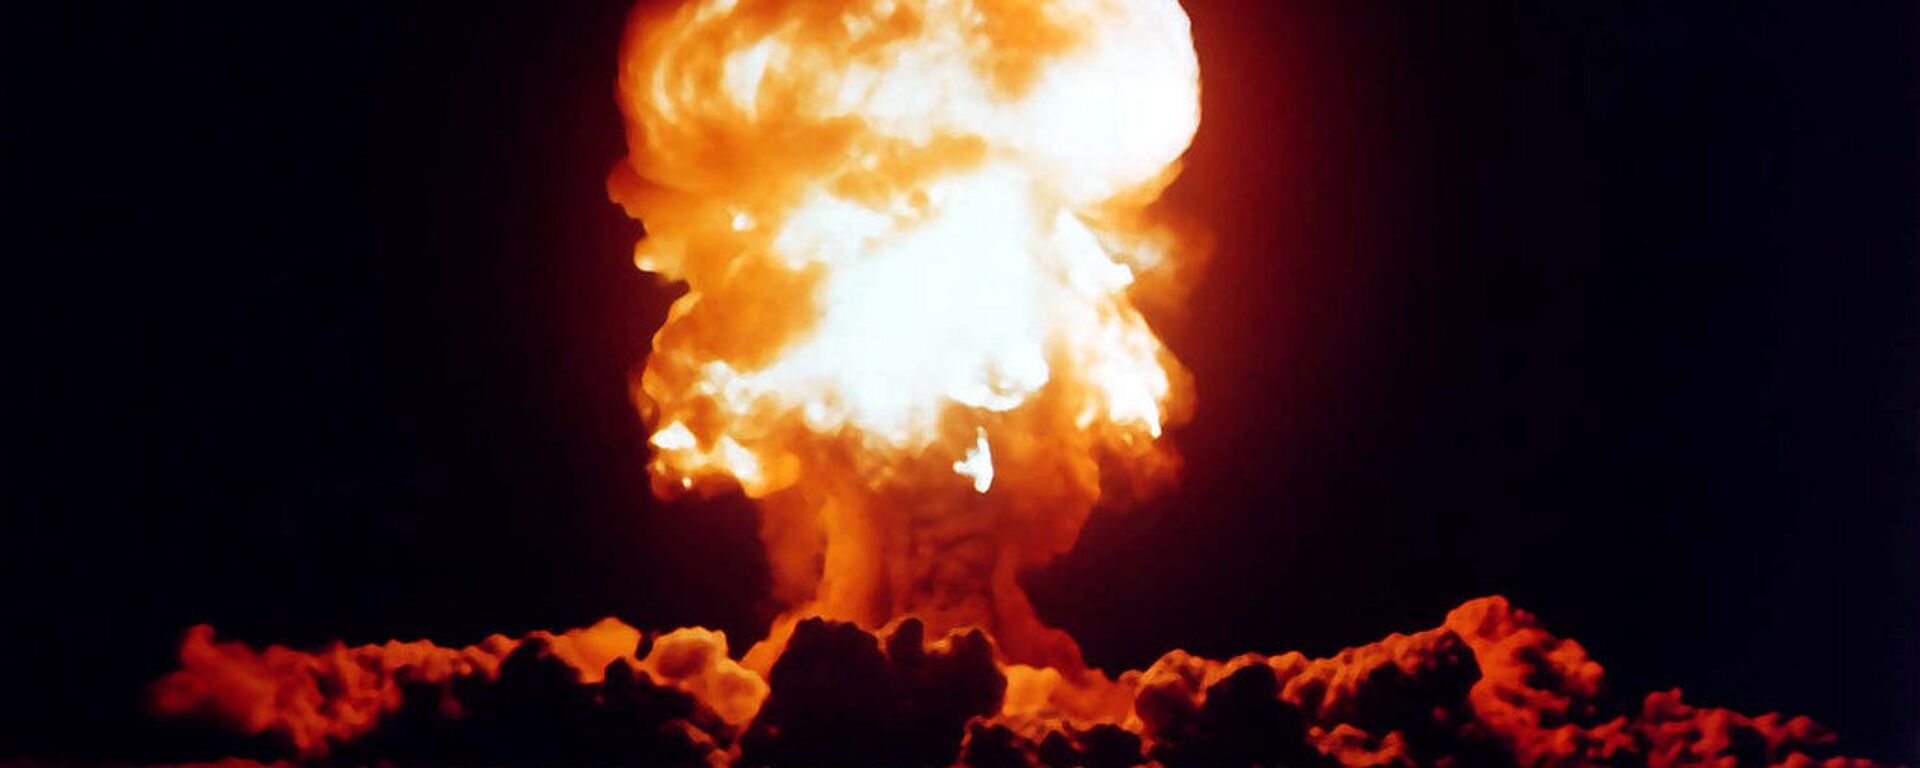 US nuclear weapons test in Nevada in 1957 - Sputnik International, 1920, 09.12.2021